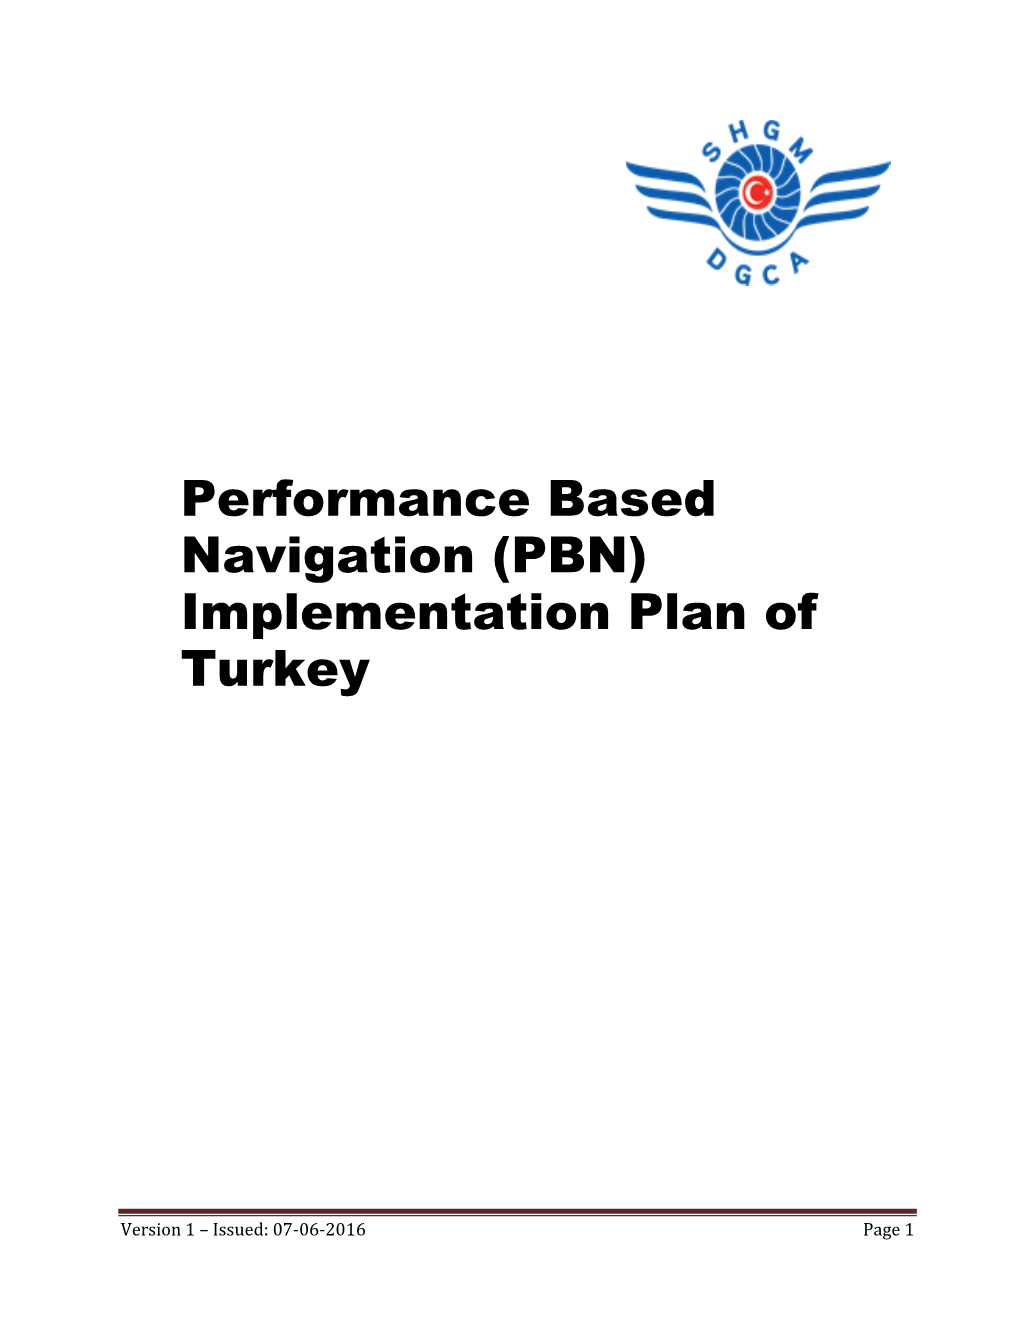 (PBN) Implementation Plan of Turkey